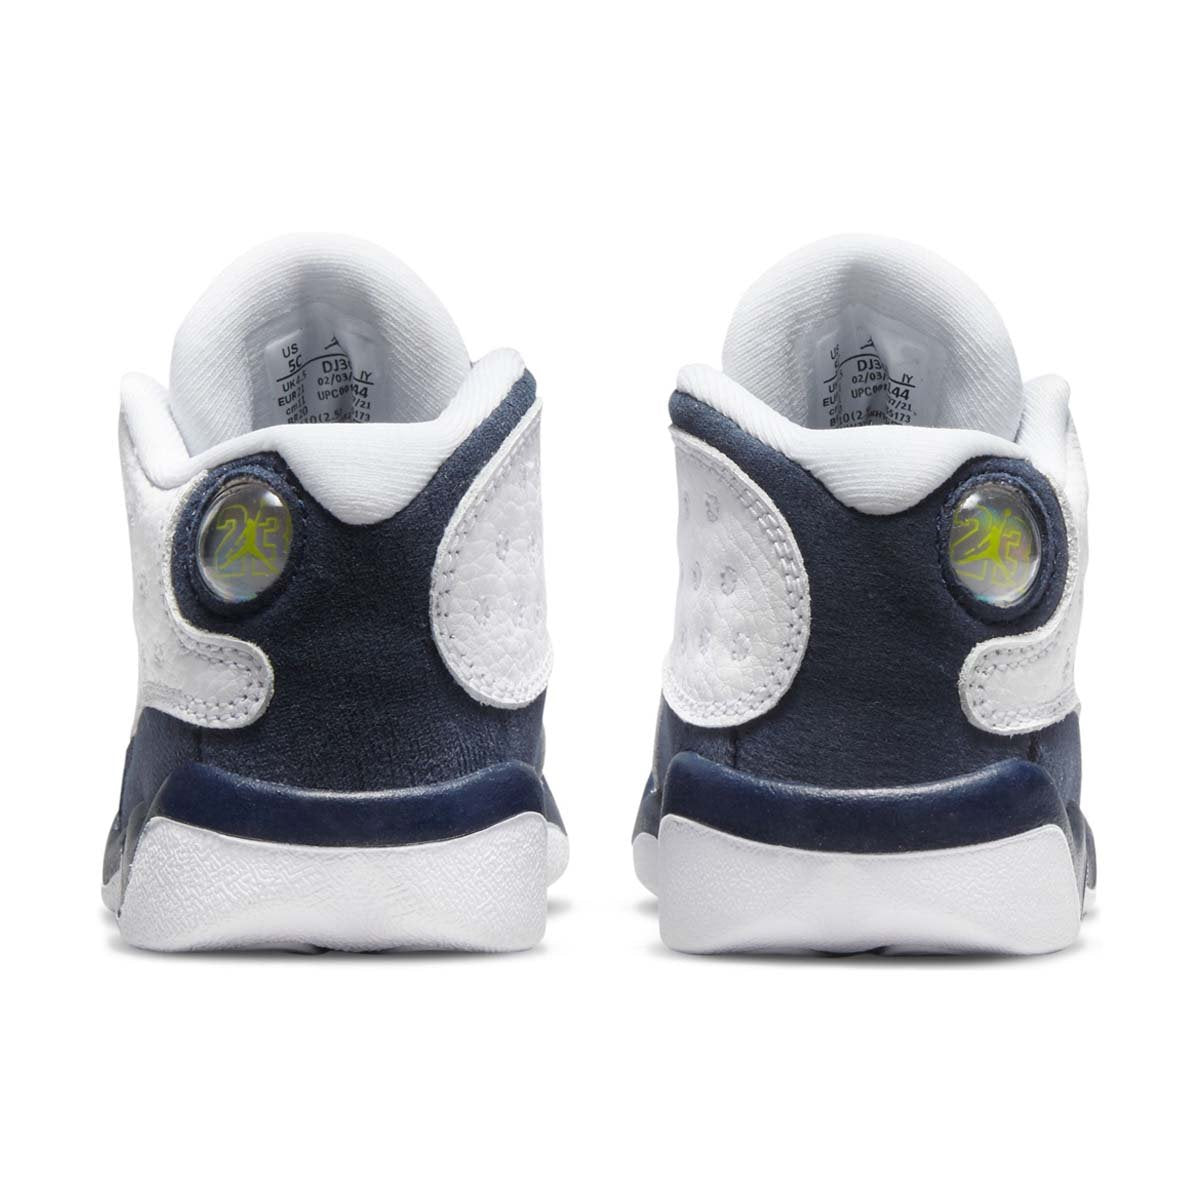 Jordan 13 Retro Infant/Toddler Shoes